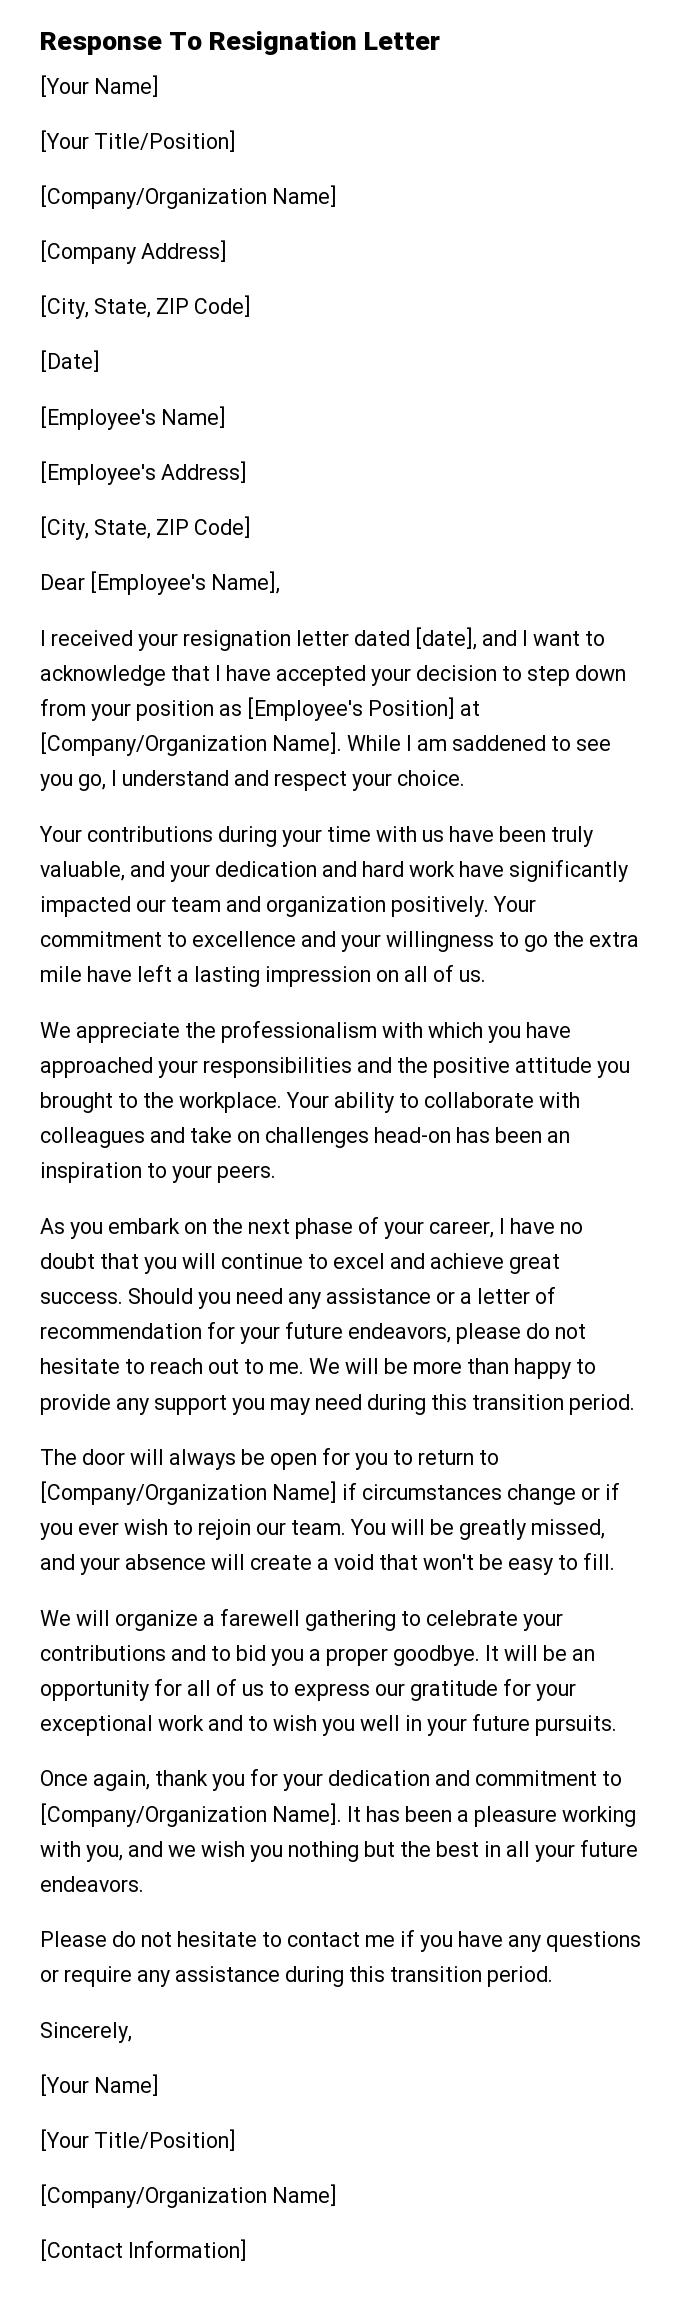 Response To Resignation Letter